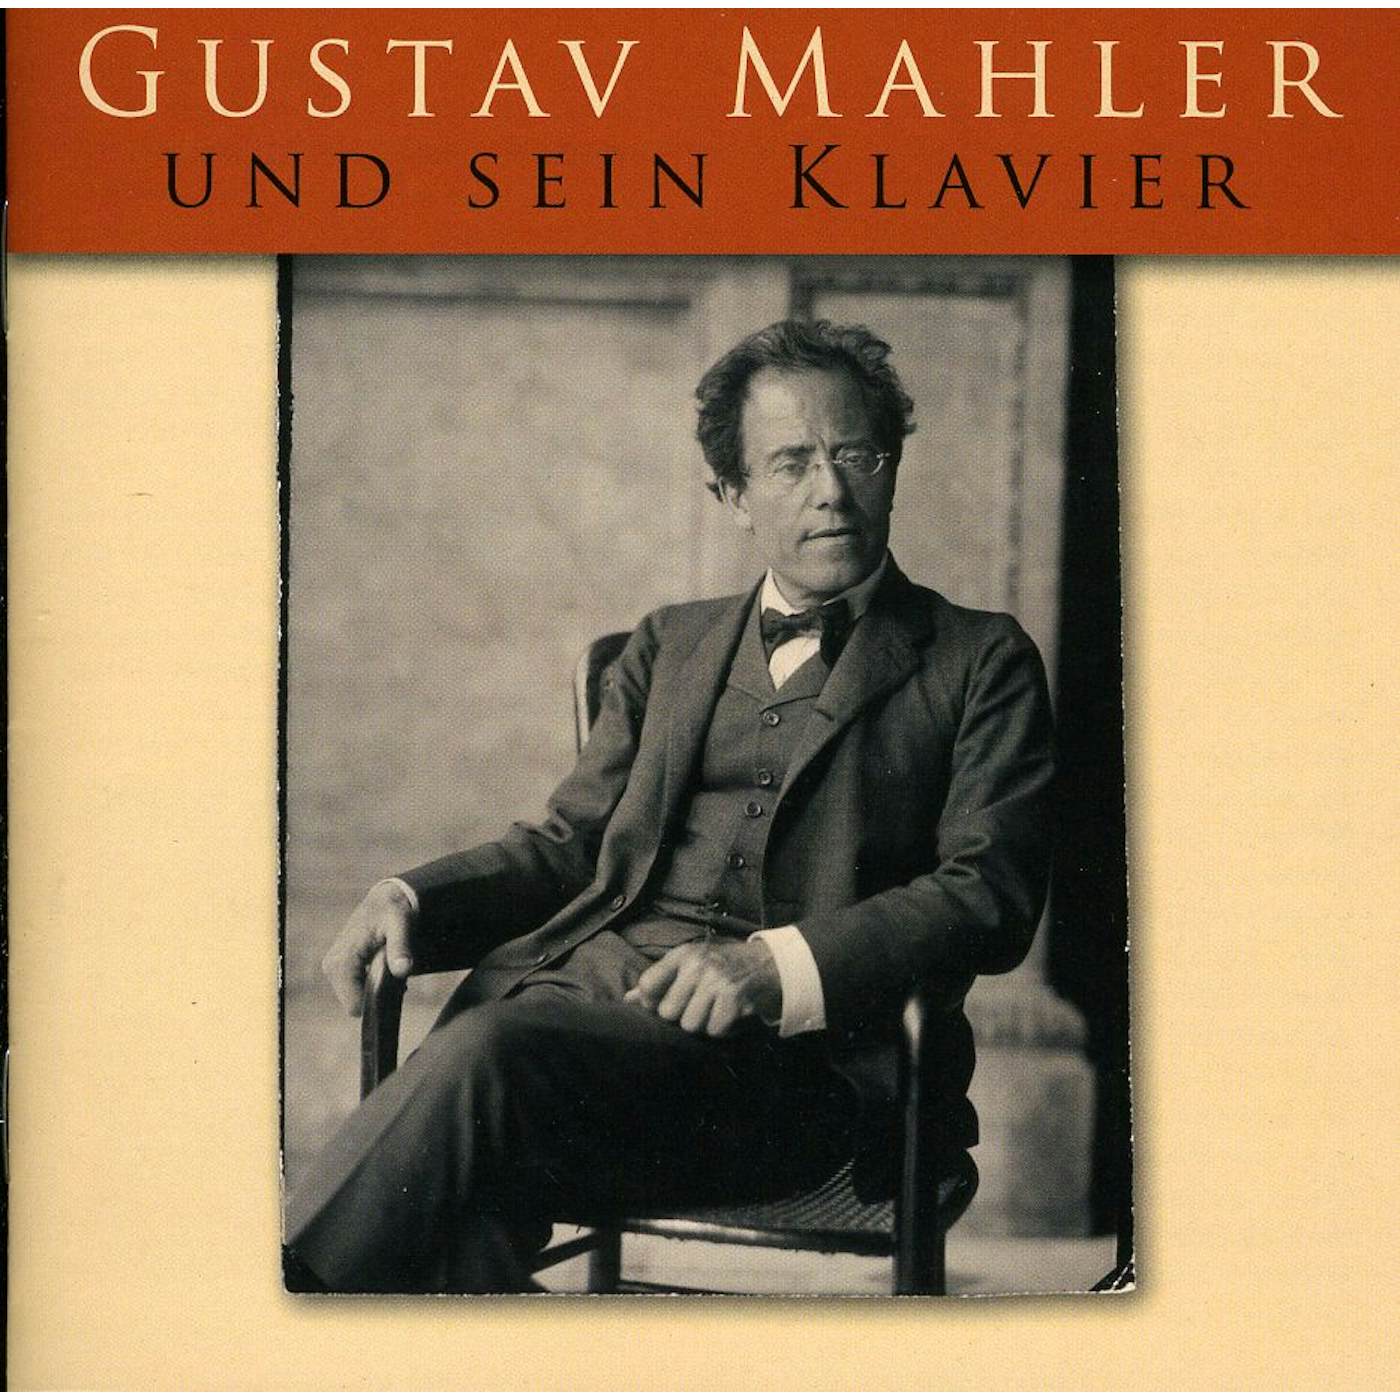 PLAYING Gustav Mahler ON MAHLER'S GRAND PIANO CD